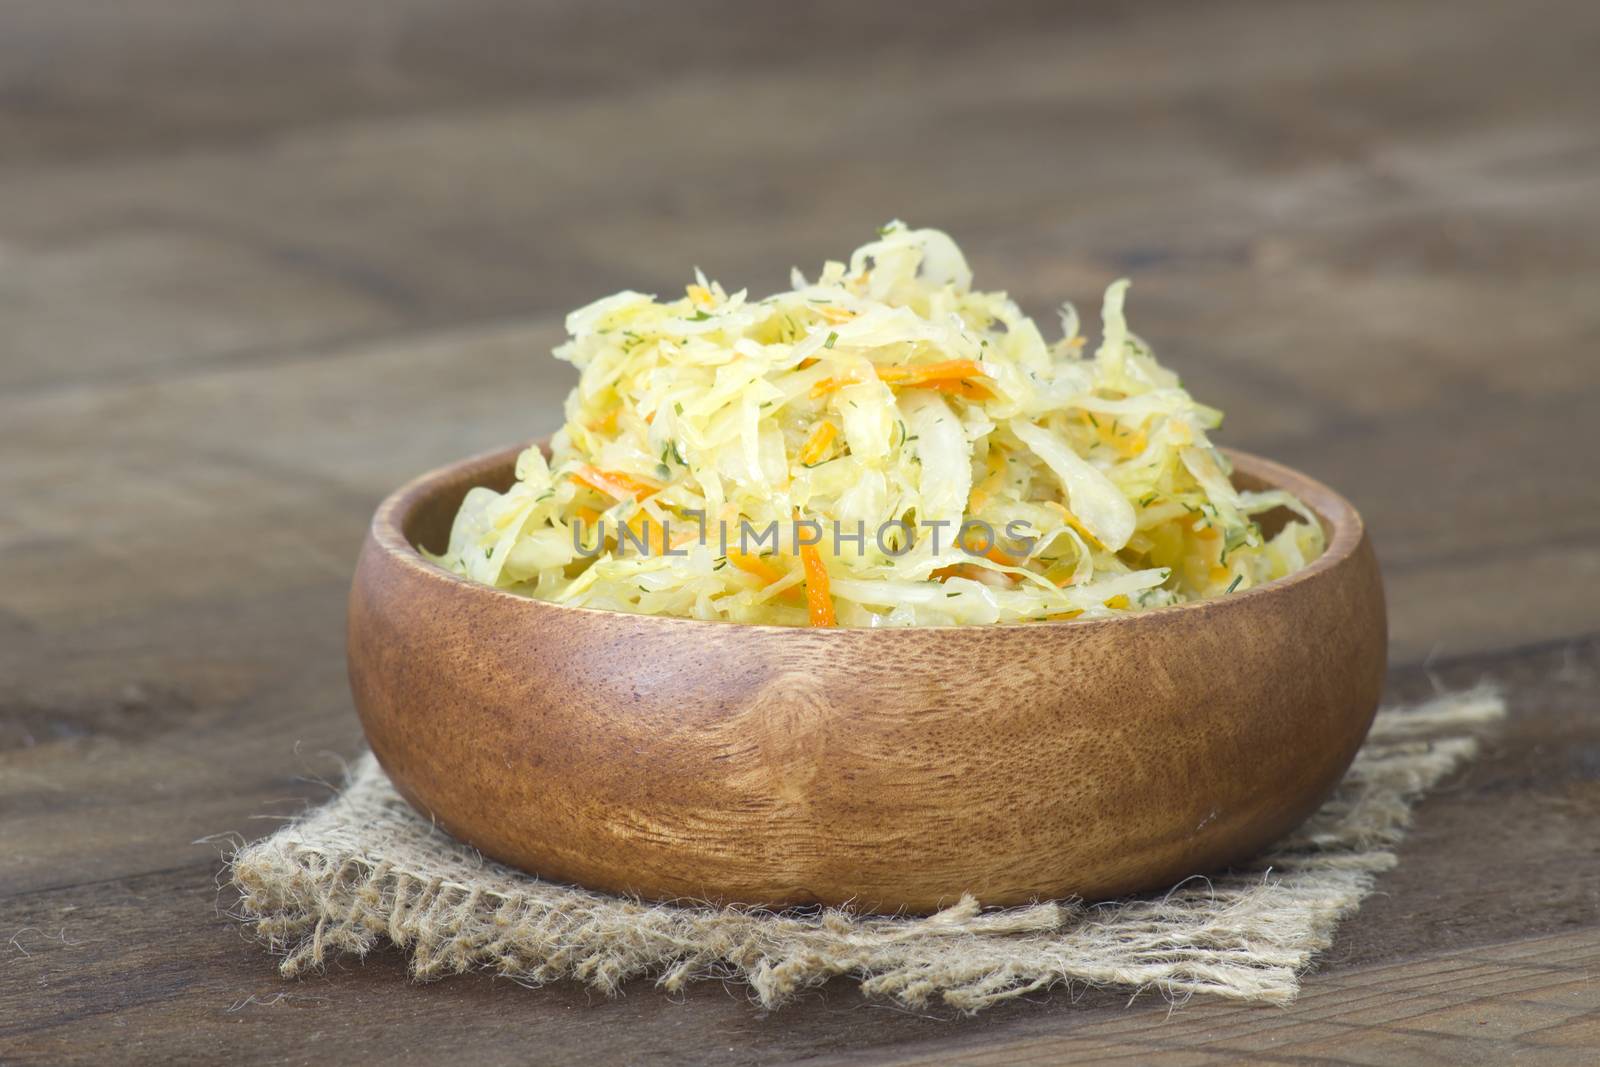 sauerkraut in a bowl